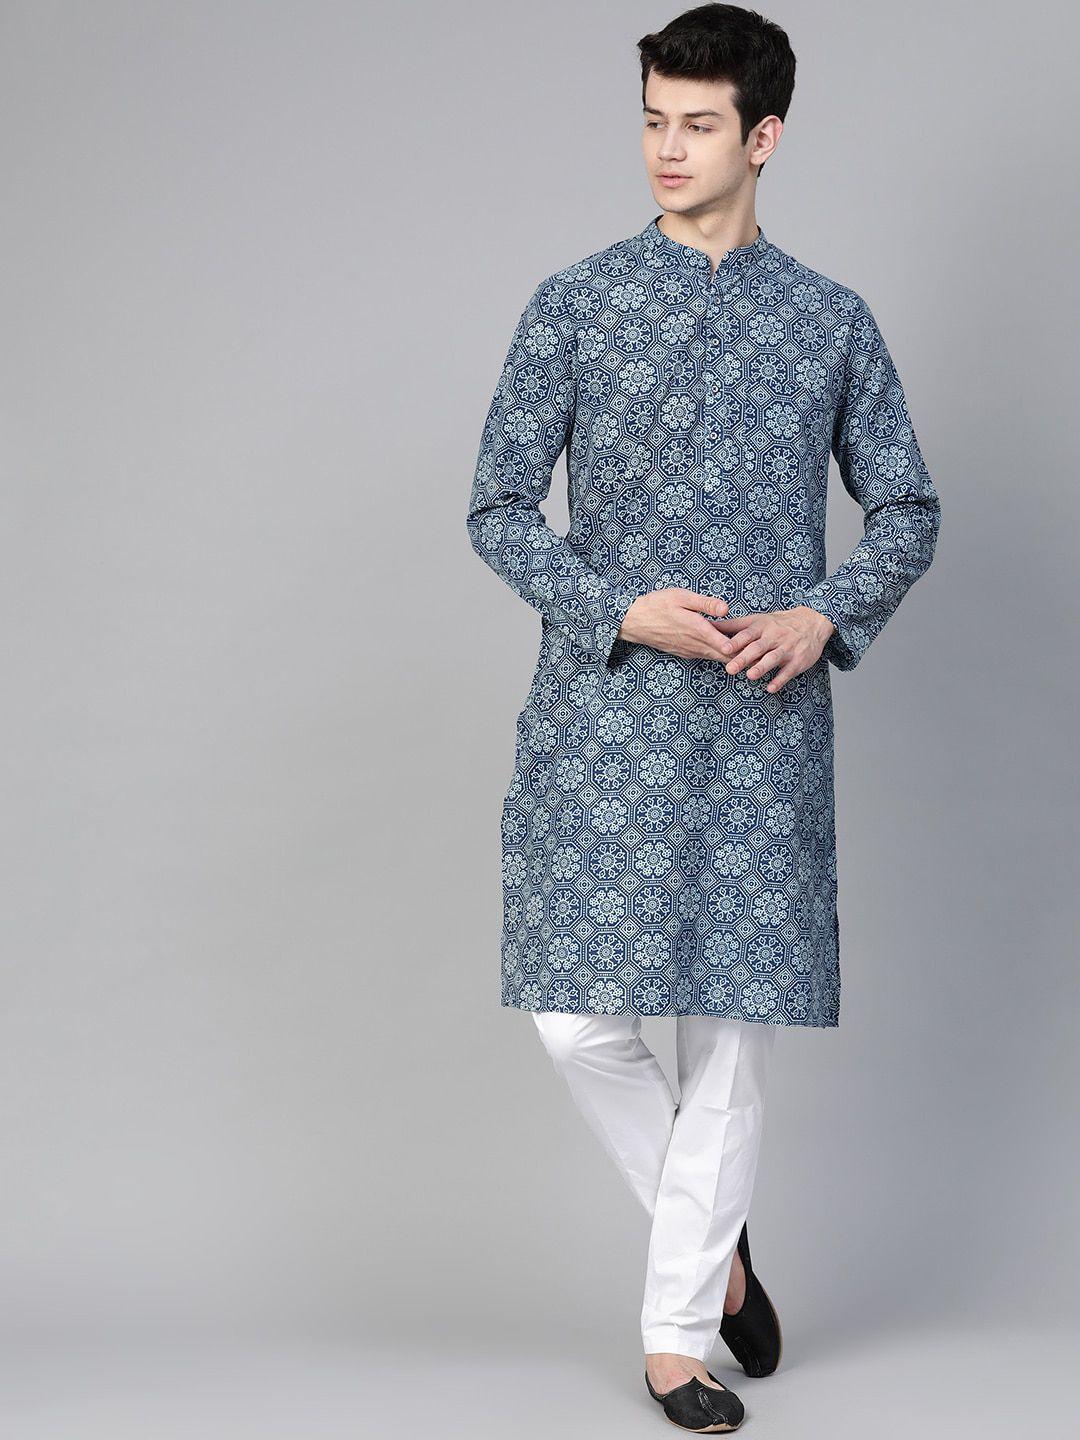 see designs motifs printed cotton kurta